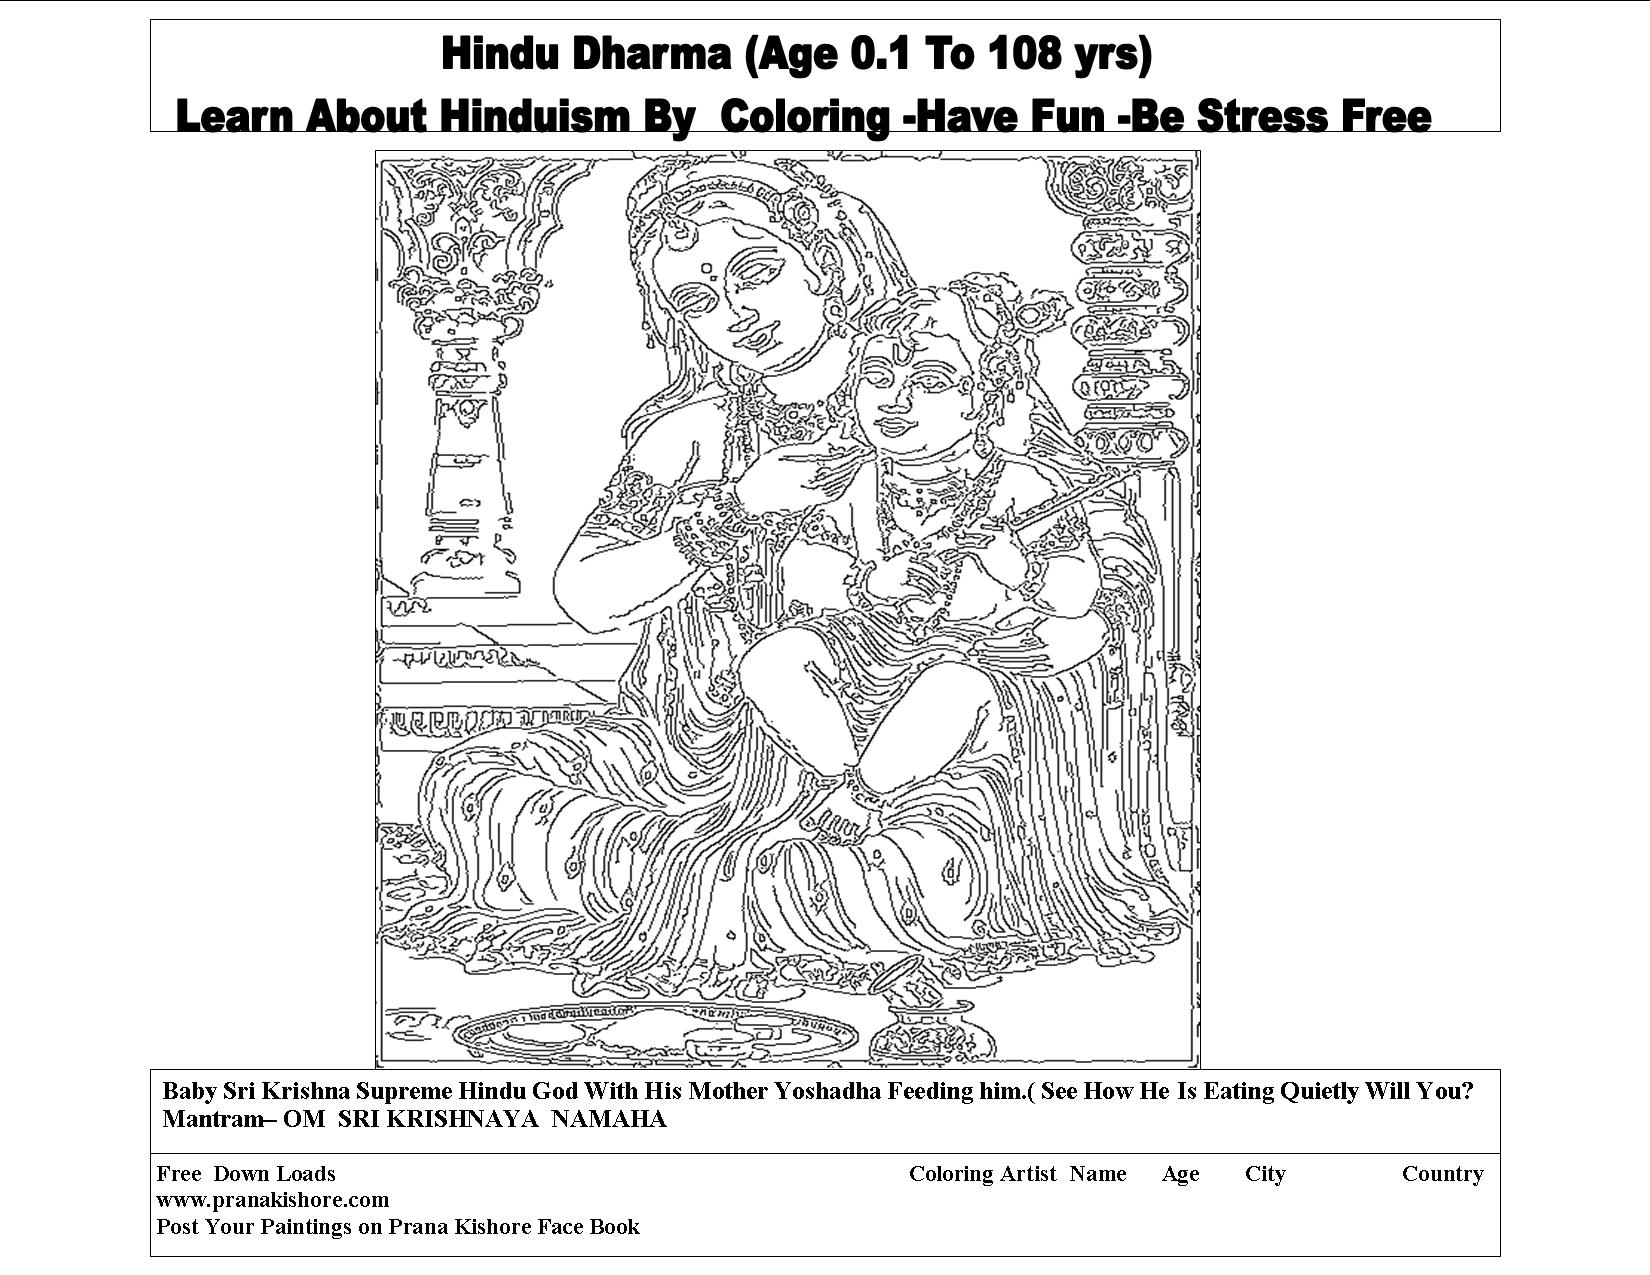 Hindu Dharma Coloring-Mother Yashodha feeding Krishna